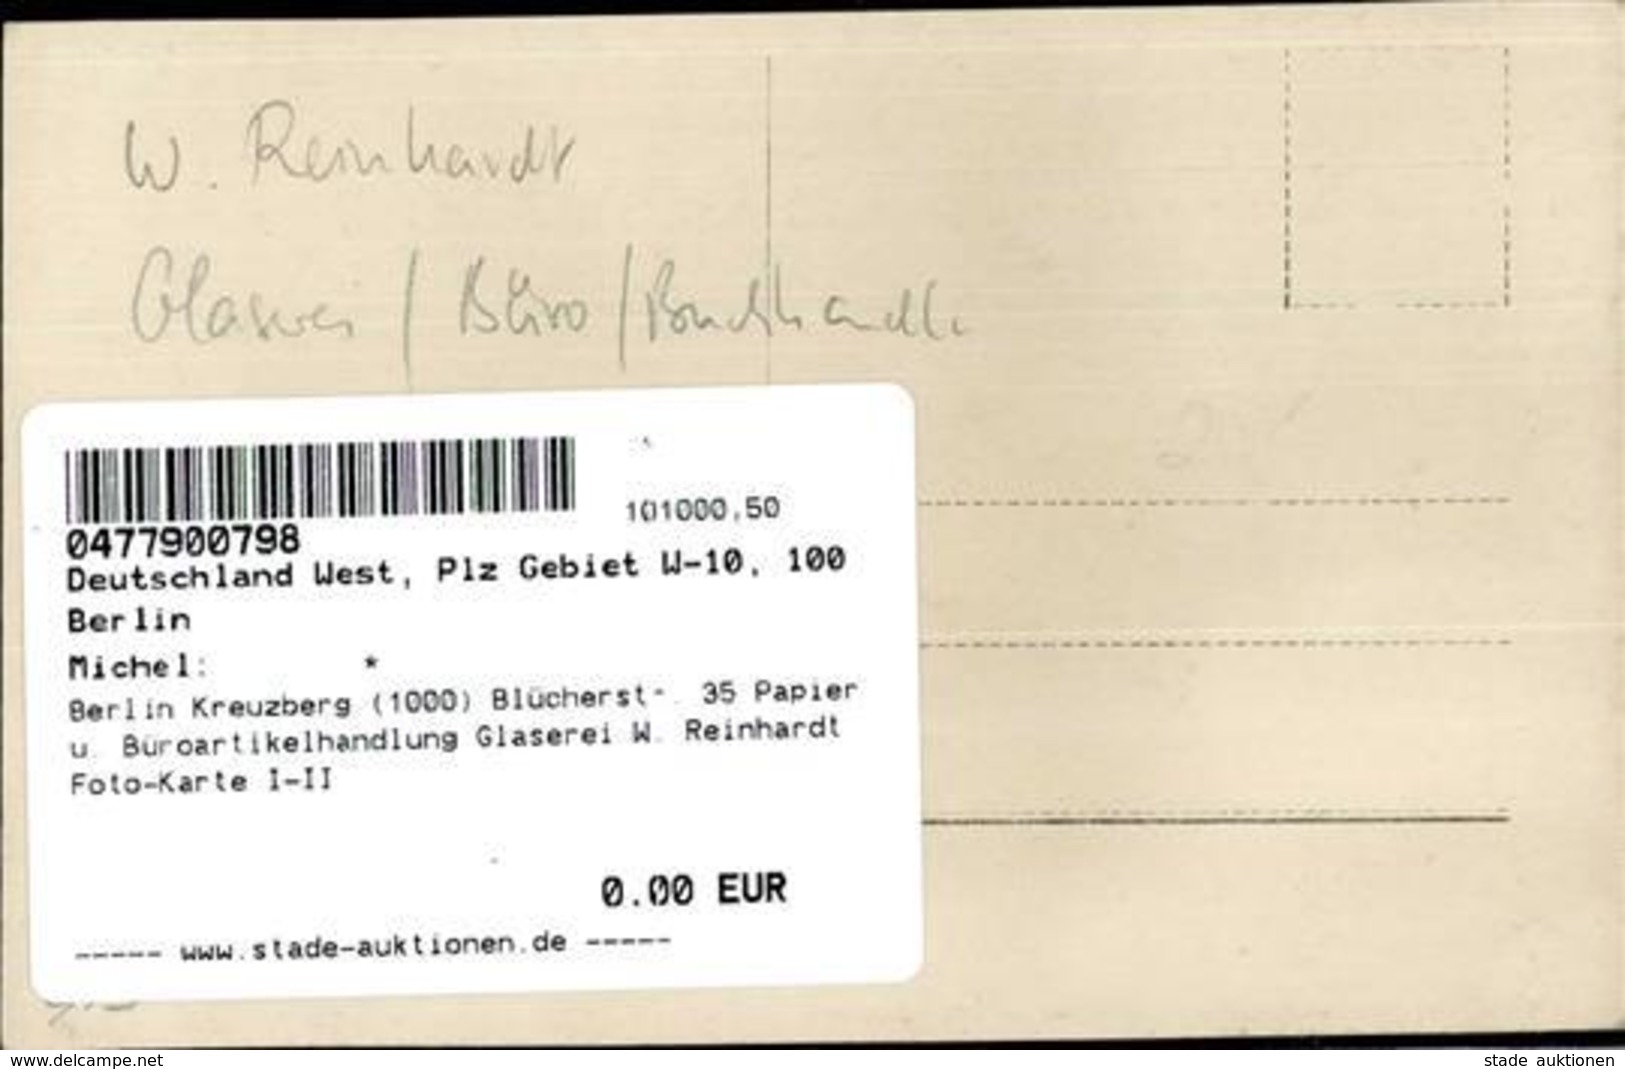 Berlin Kreuzberg (1000) Blücherstr. 35 Papier U. Büroartikelhandlung Glaserei W. Reinhardt Foto-Karte I-II - Cameroon